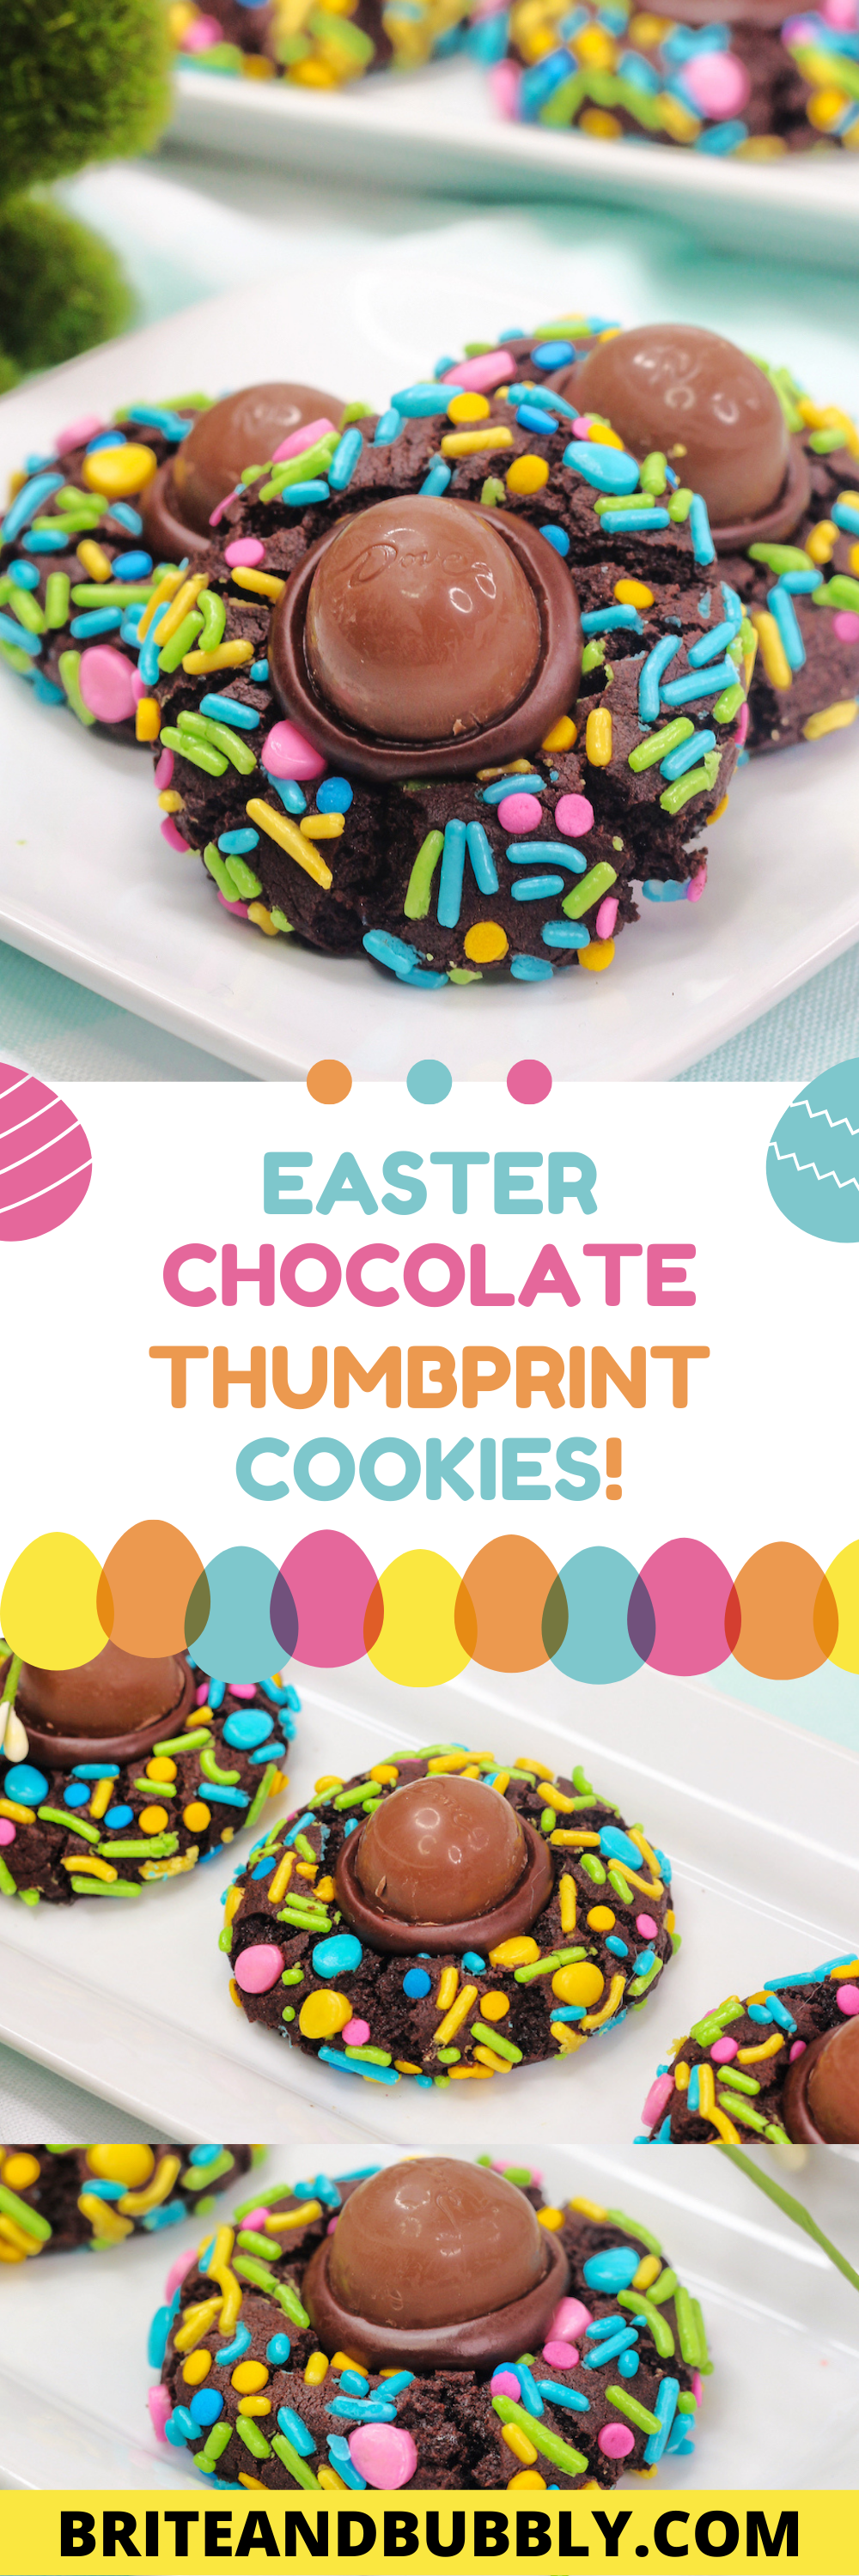 chocolate easter thumbprint cookies pinterest image